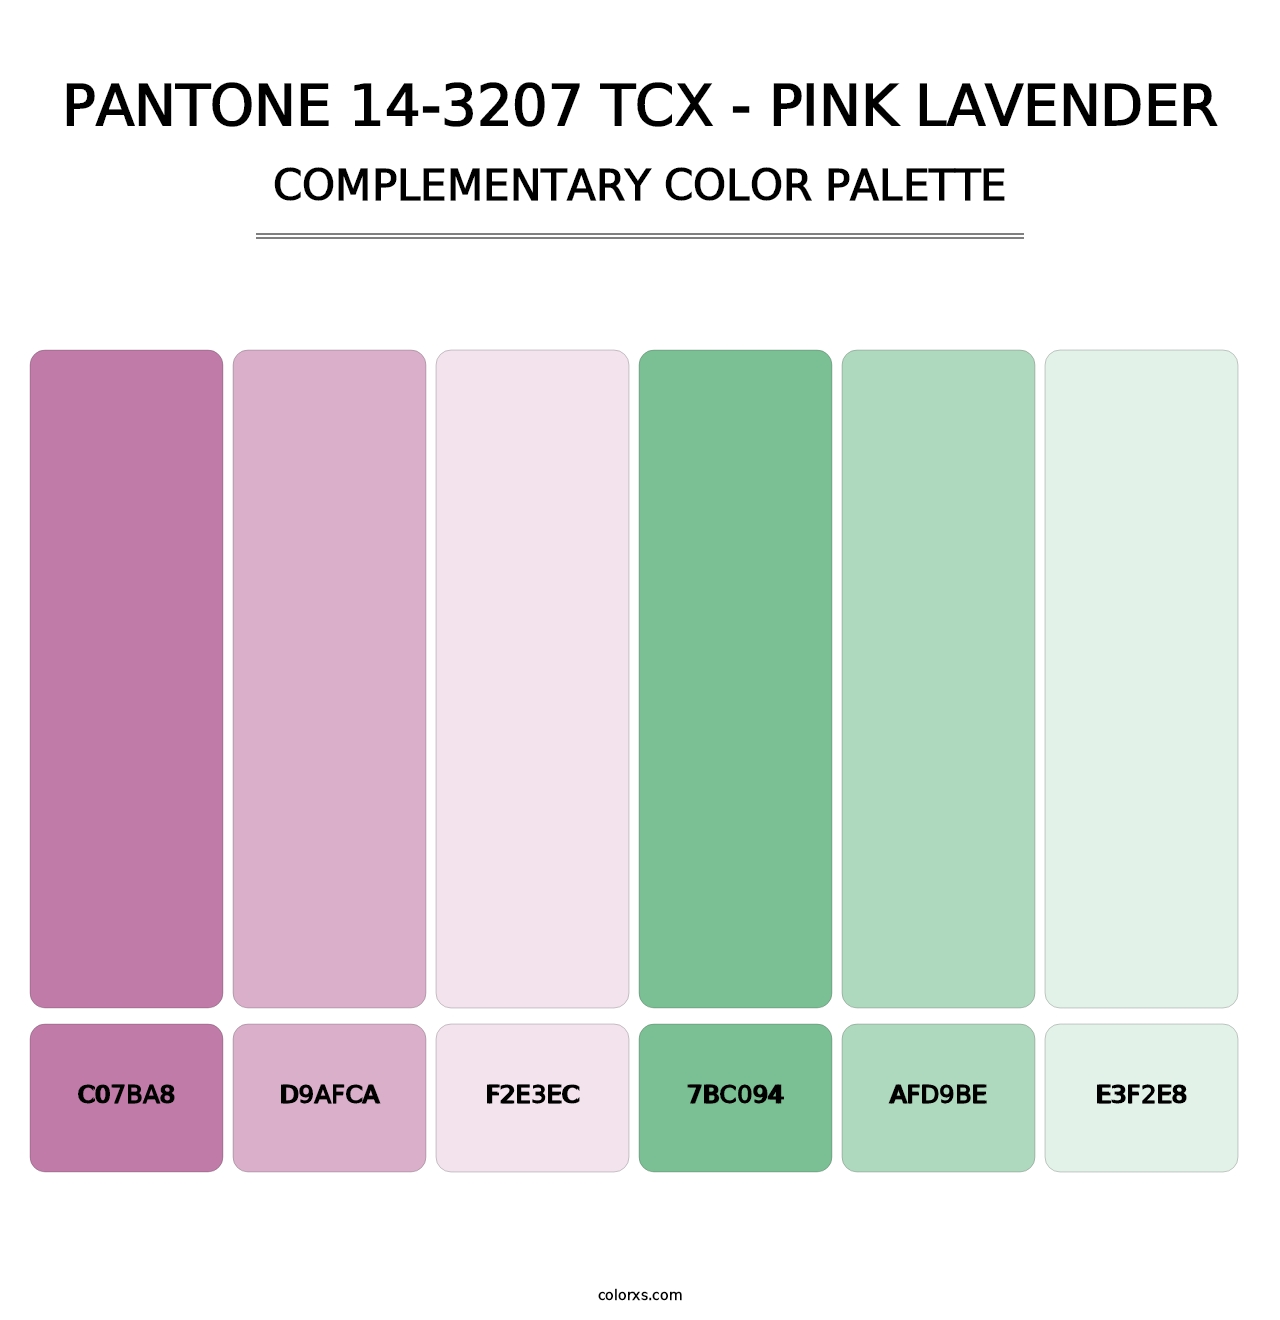 PANTONE 14-3207 TCX - Pink Lavender - Complementary Color Palette